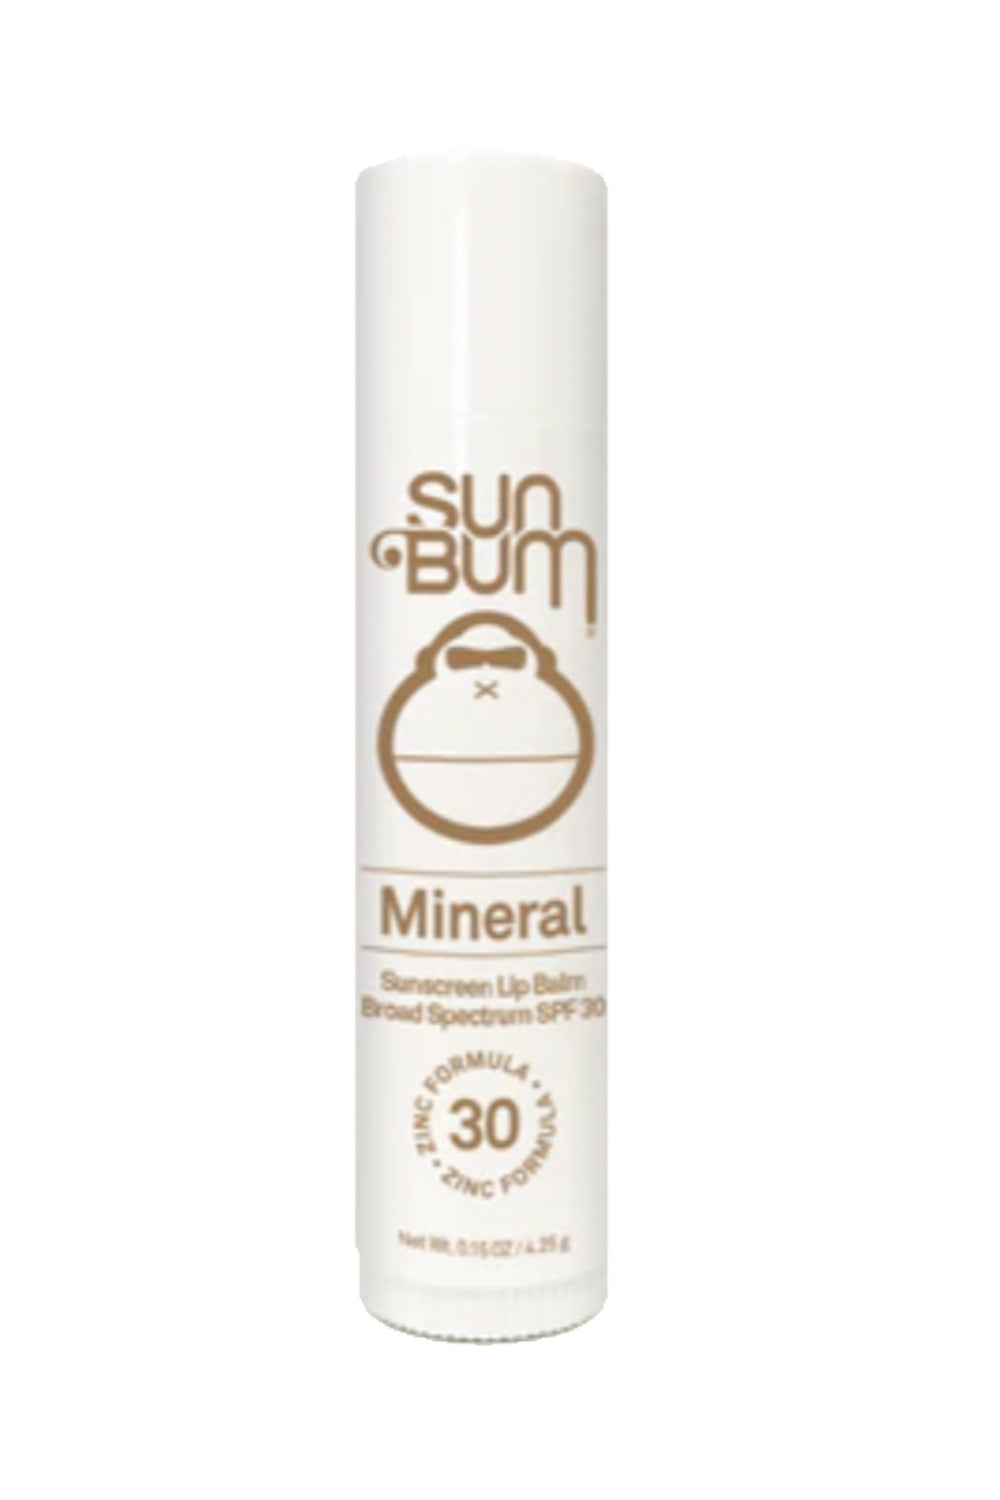 Sun Bum Mineral SPF 30 Lip Balm.